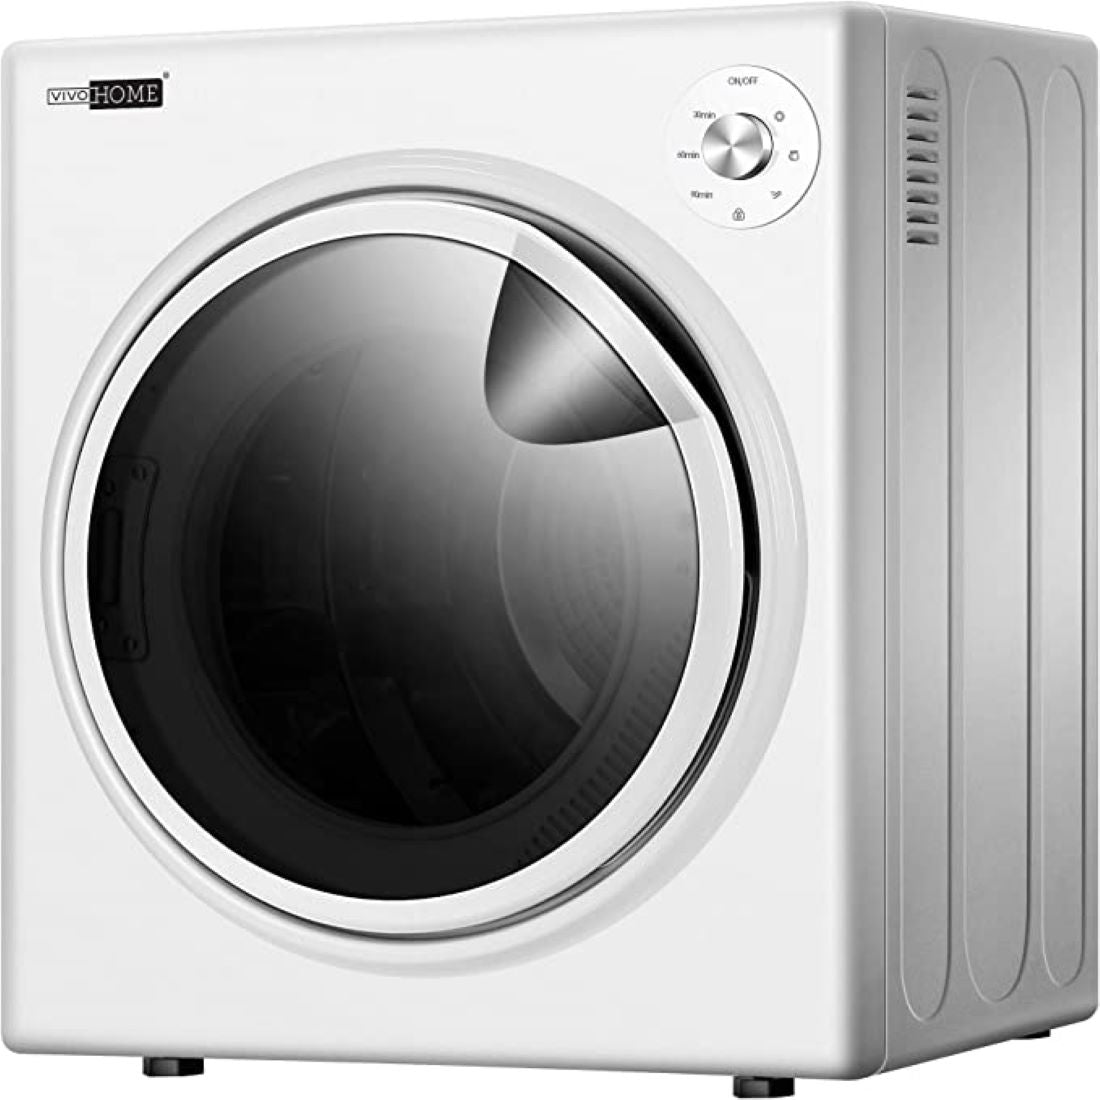 VIVOHOME Portable Laundry Dryer Machine 9lbs/2.6 cu.ft 110V 900W